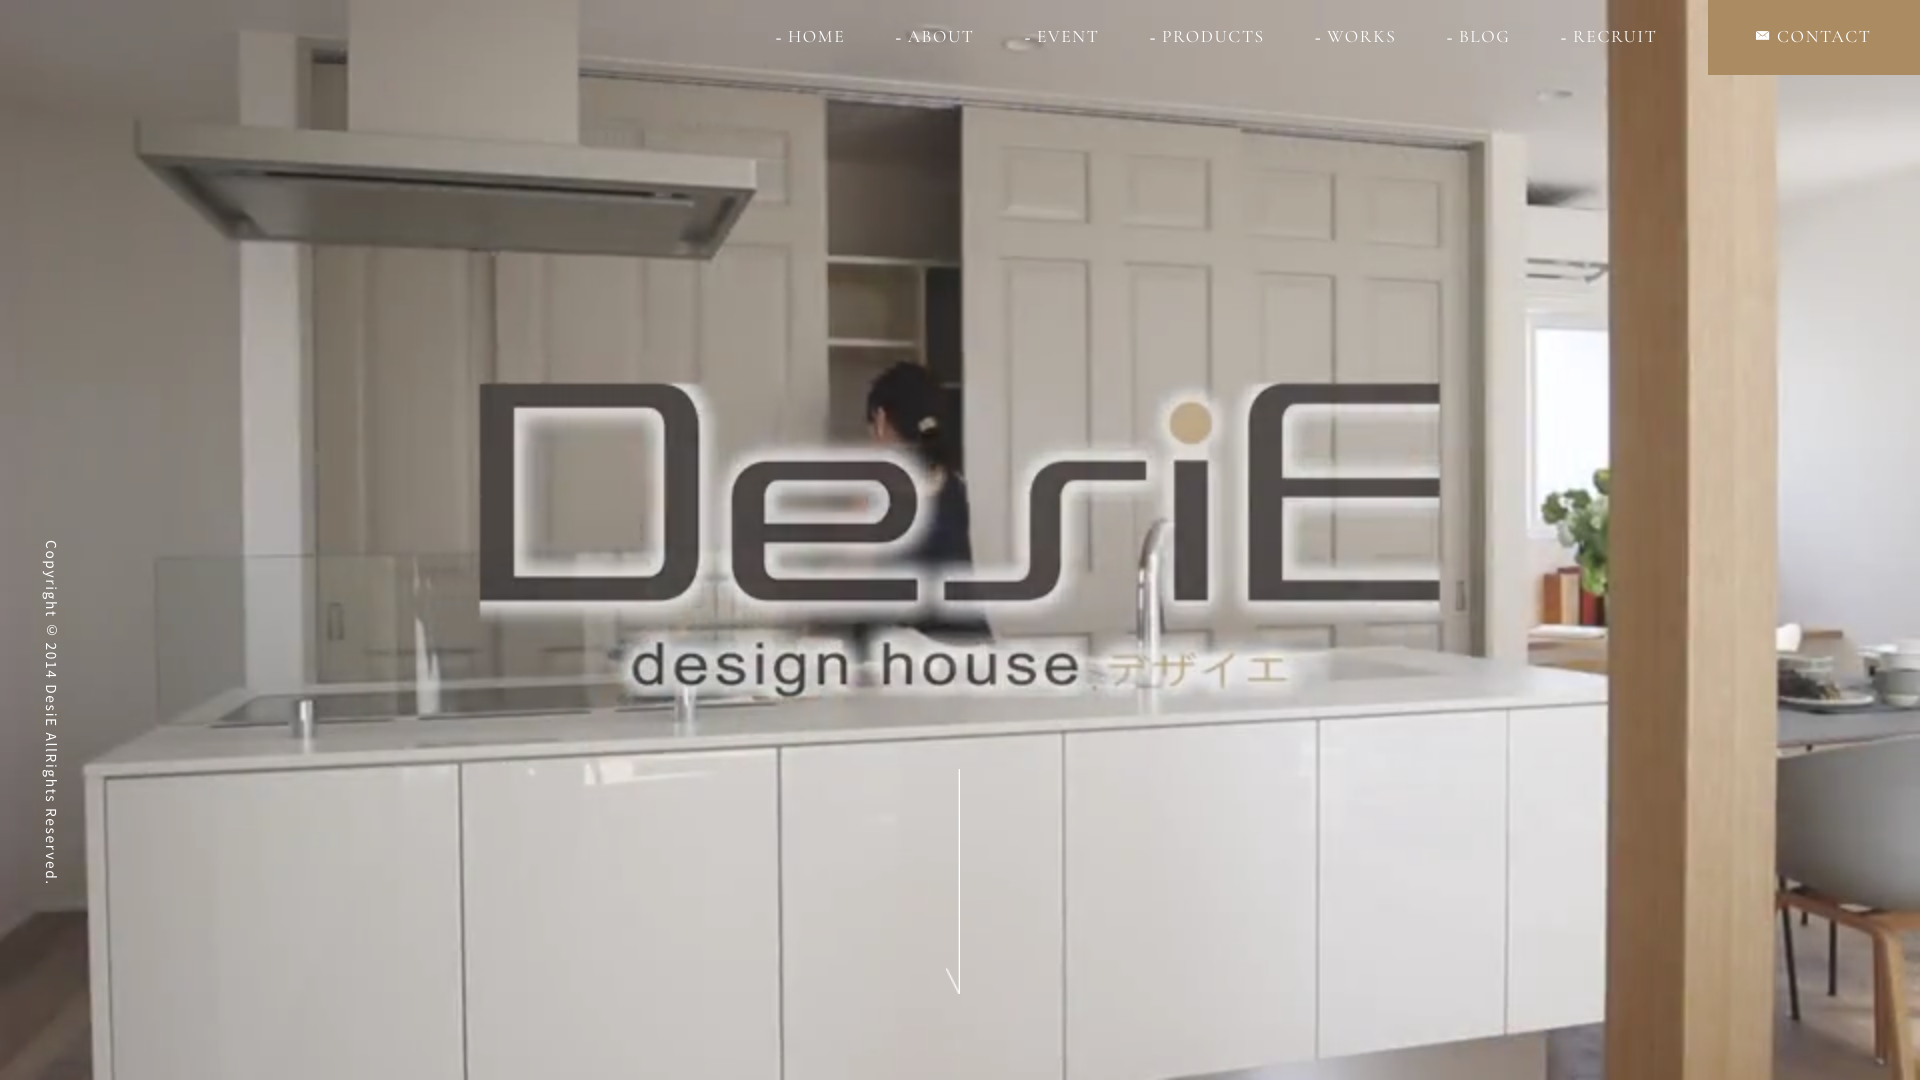 DesiE - design house デザイエ -